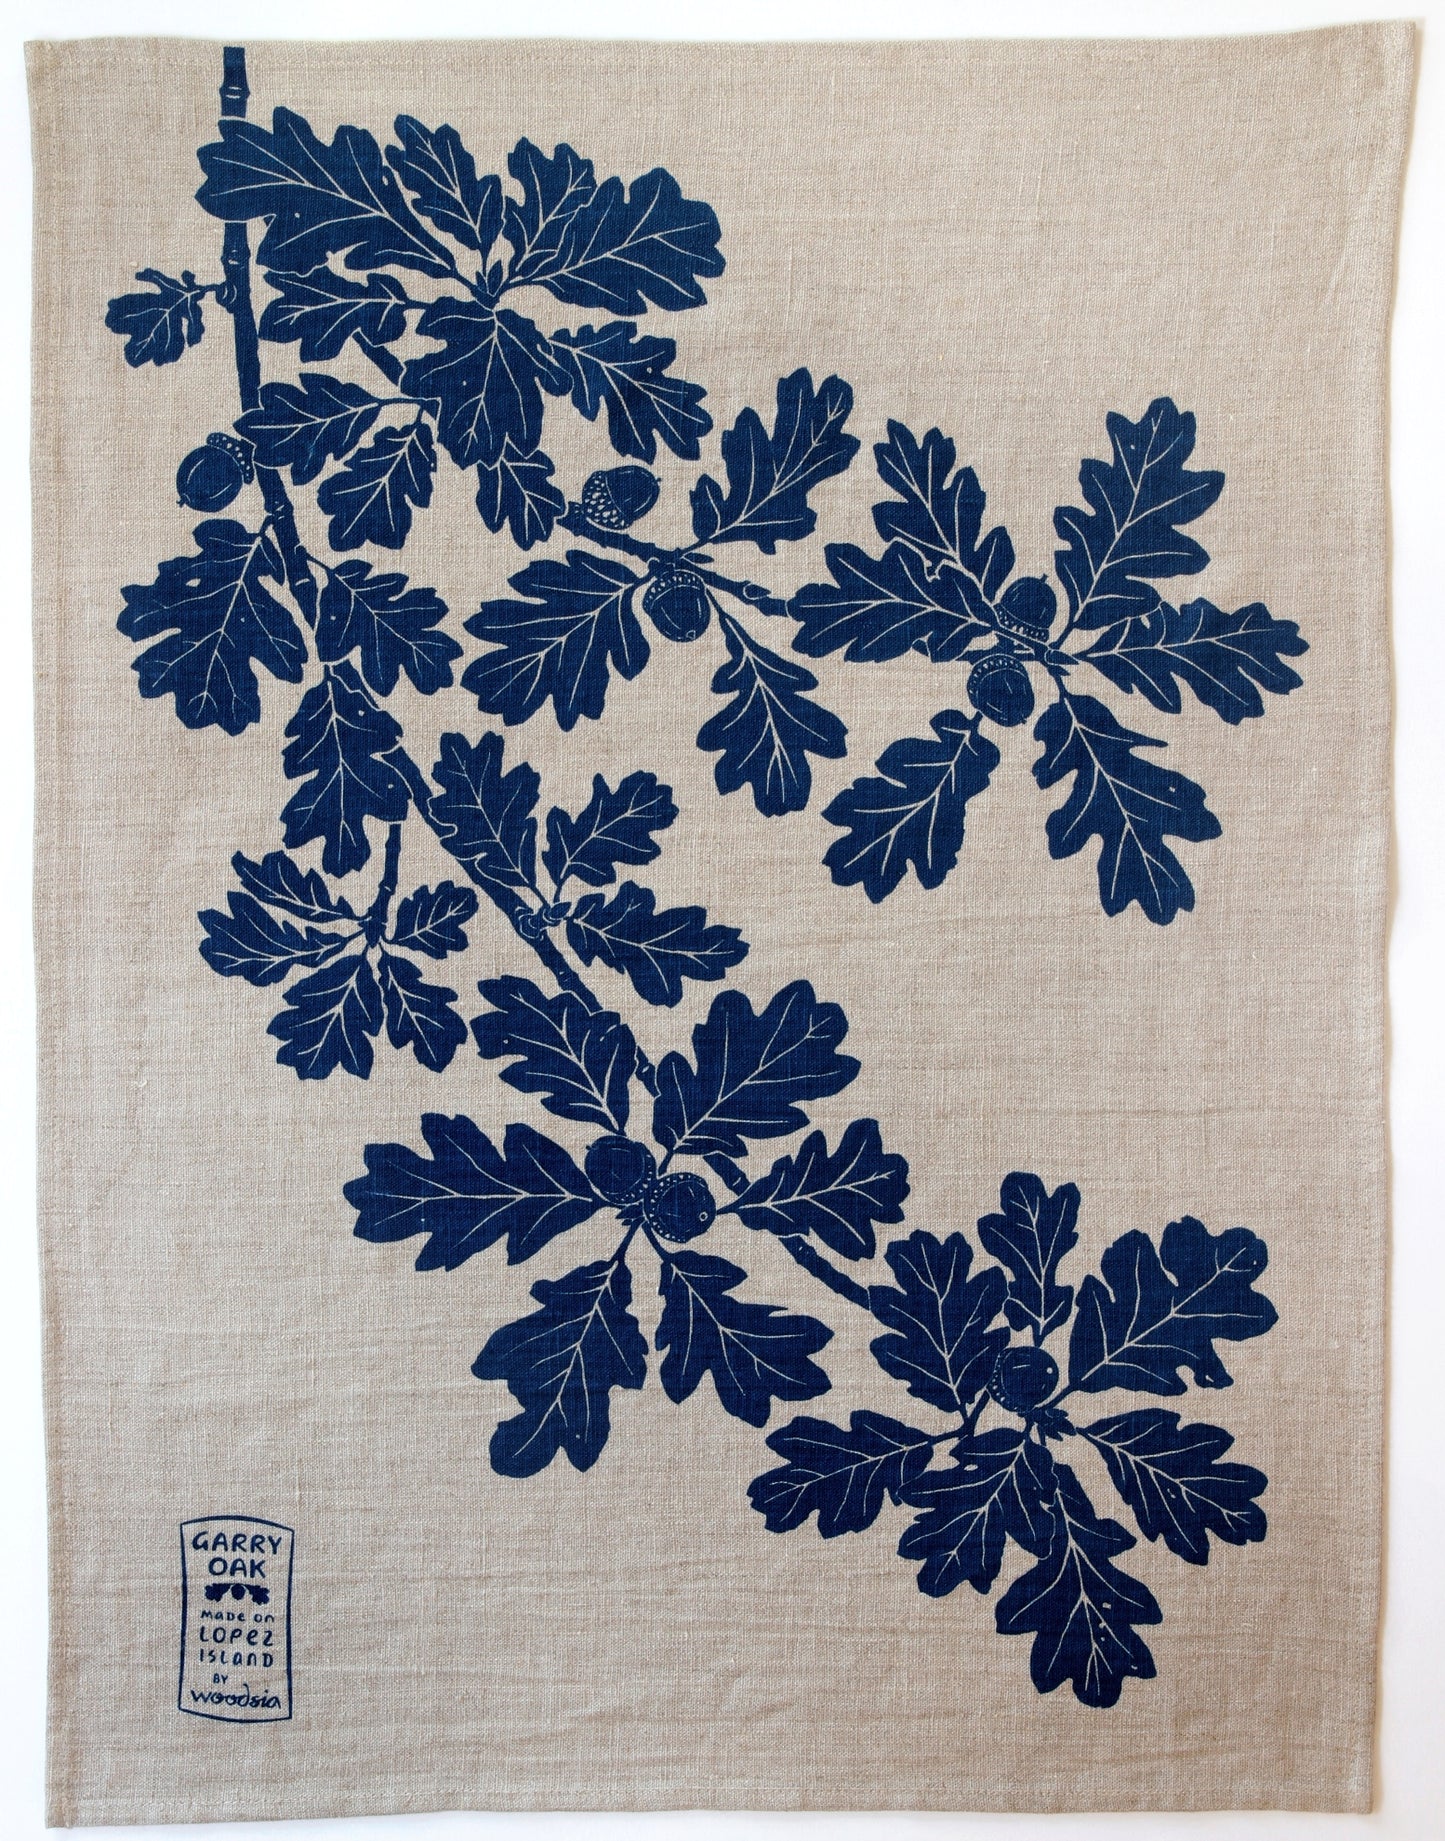 Garry Oak Kitchen Towel in Deep Blue on Natural Linen